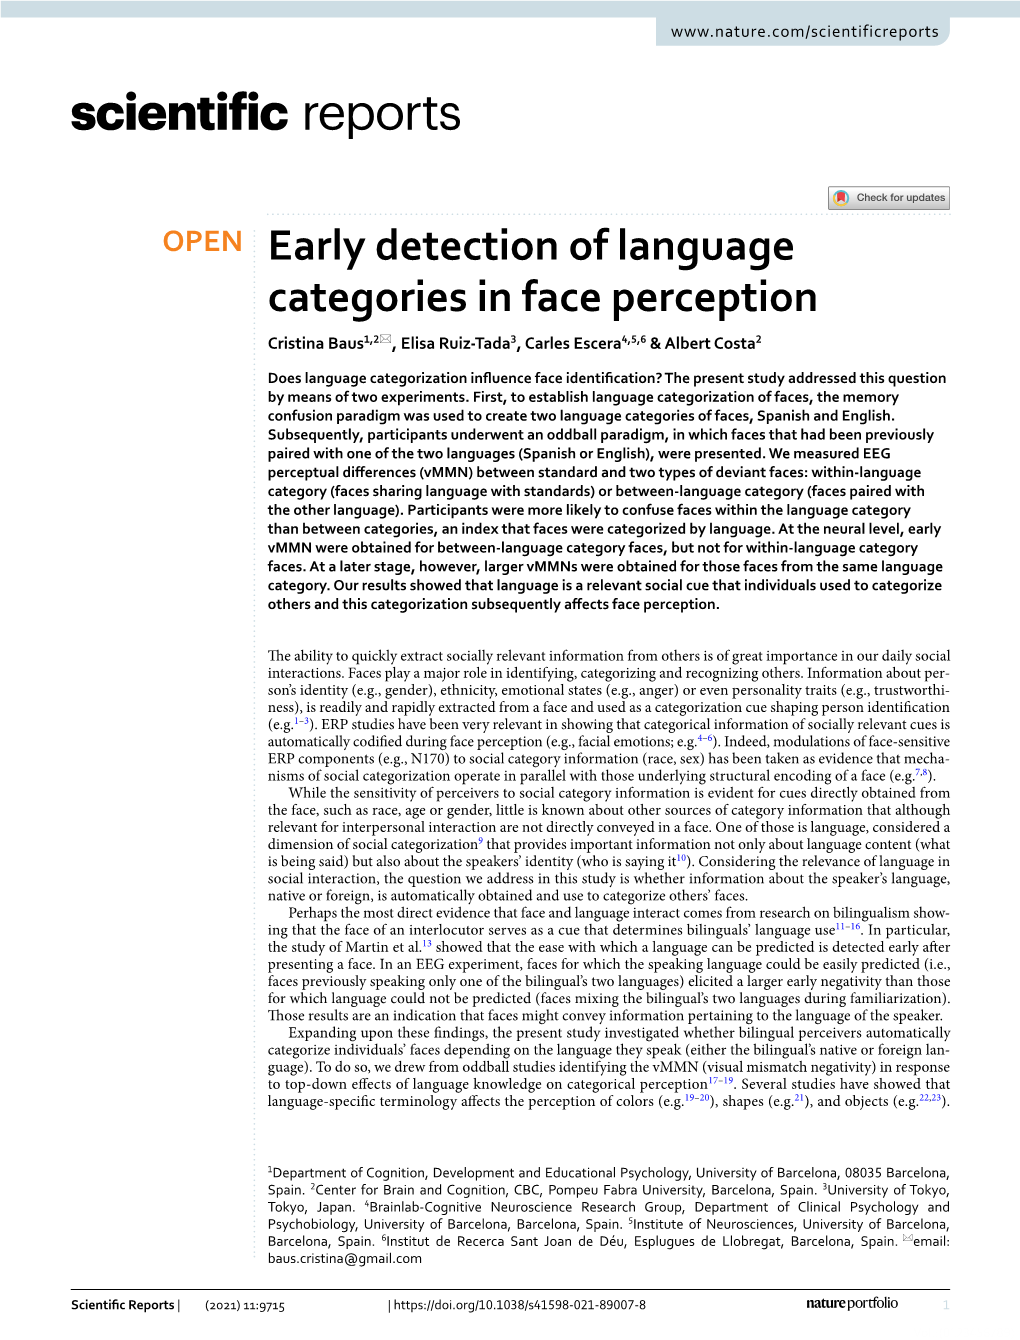 Early Detection of Language Categories in Face Perception Cristina Baus1,2*, Elisa Ruiz‑Tada3, Carles Escera4,5,6 & Albert Costa2